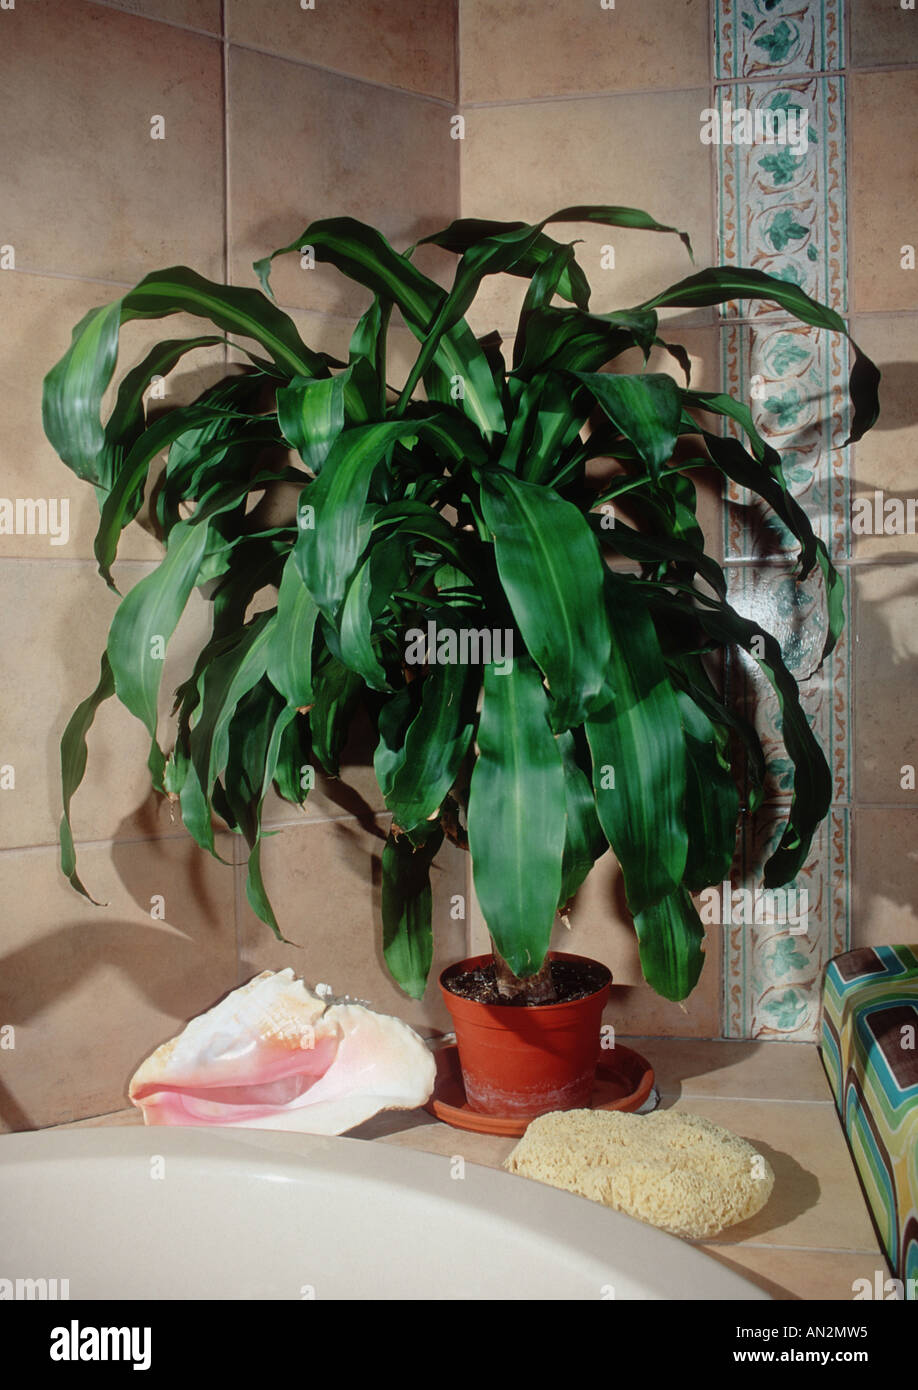 corn plant (Dracaena fragrans), potted plant Stock Photo